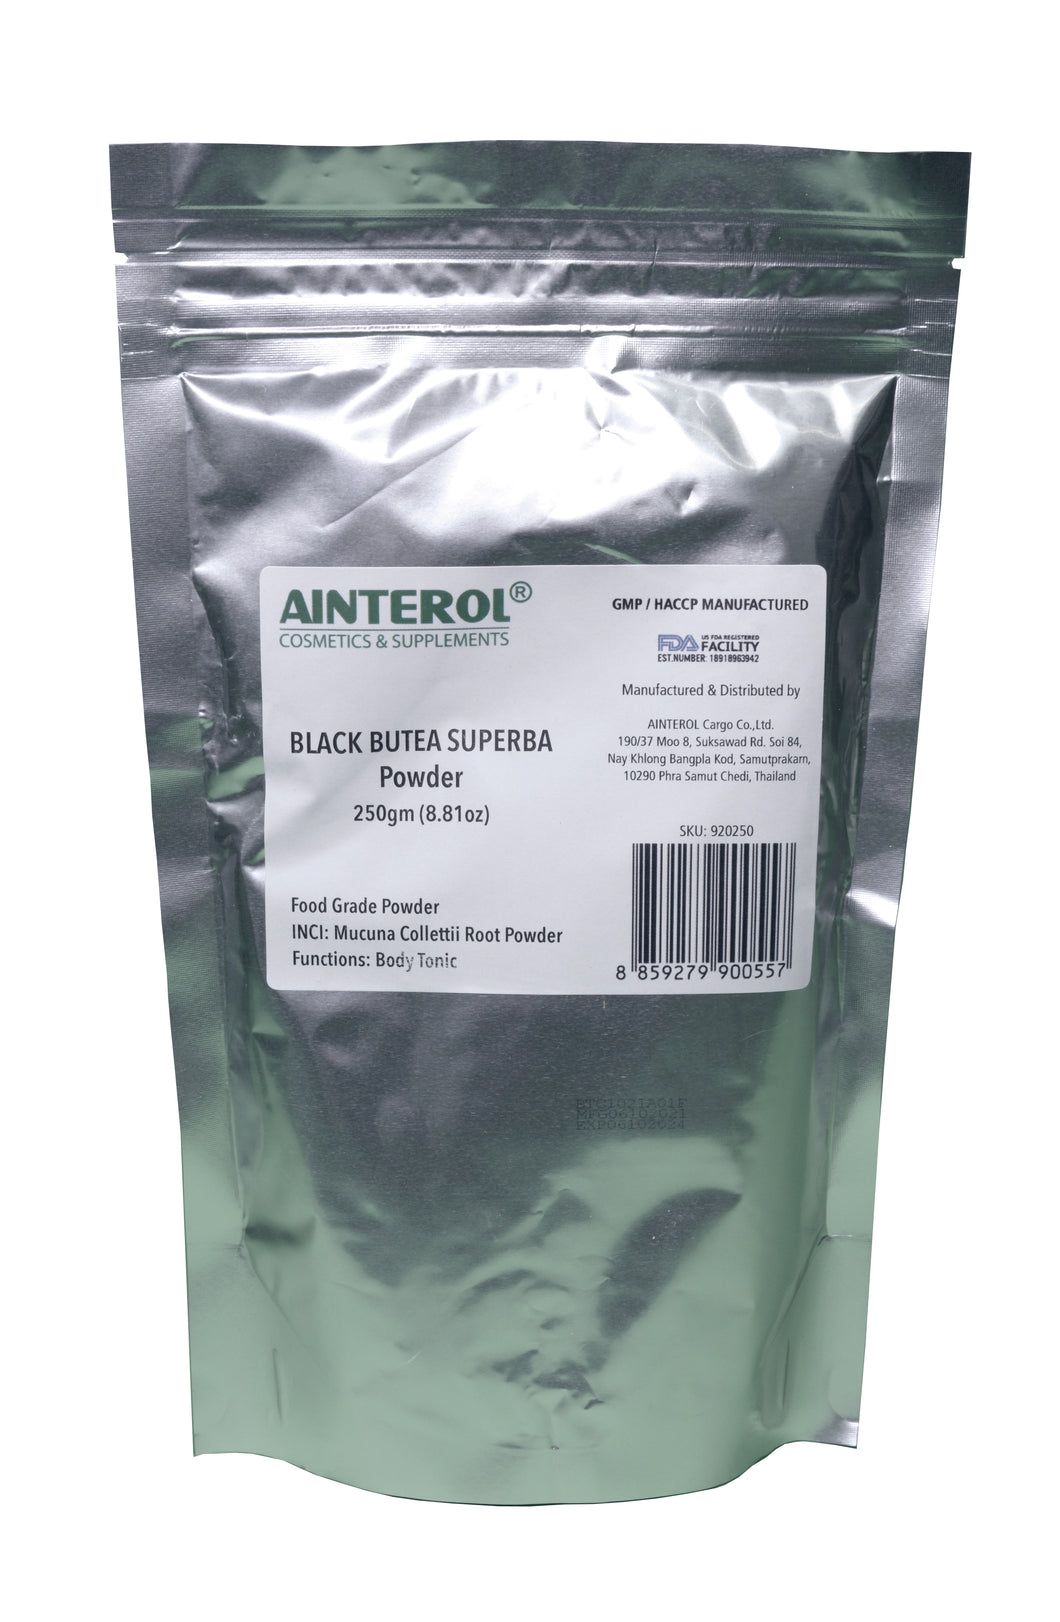 AINTEROL® Black Butea Superba Powder - 250gm (8.81oz)